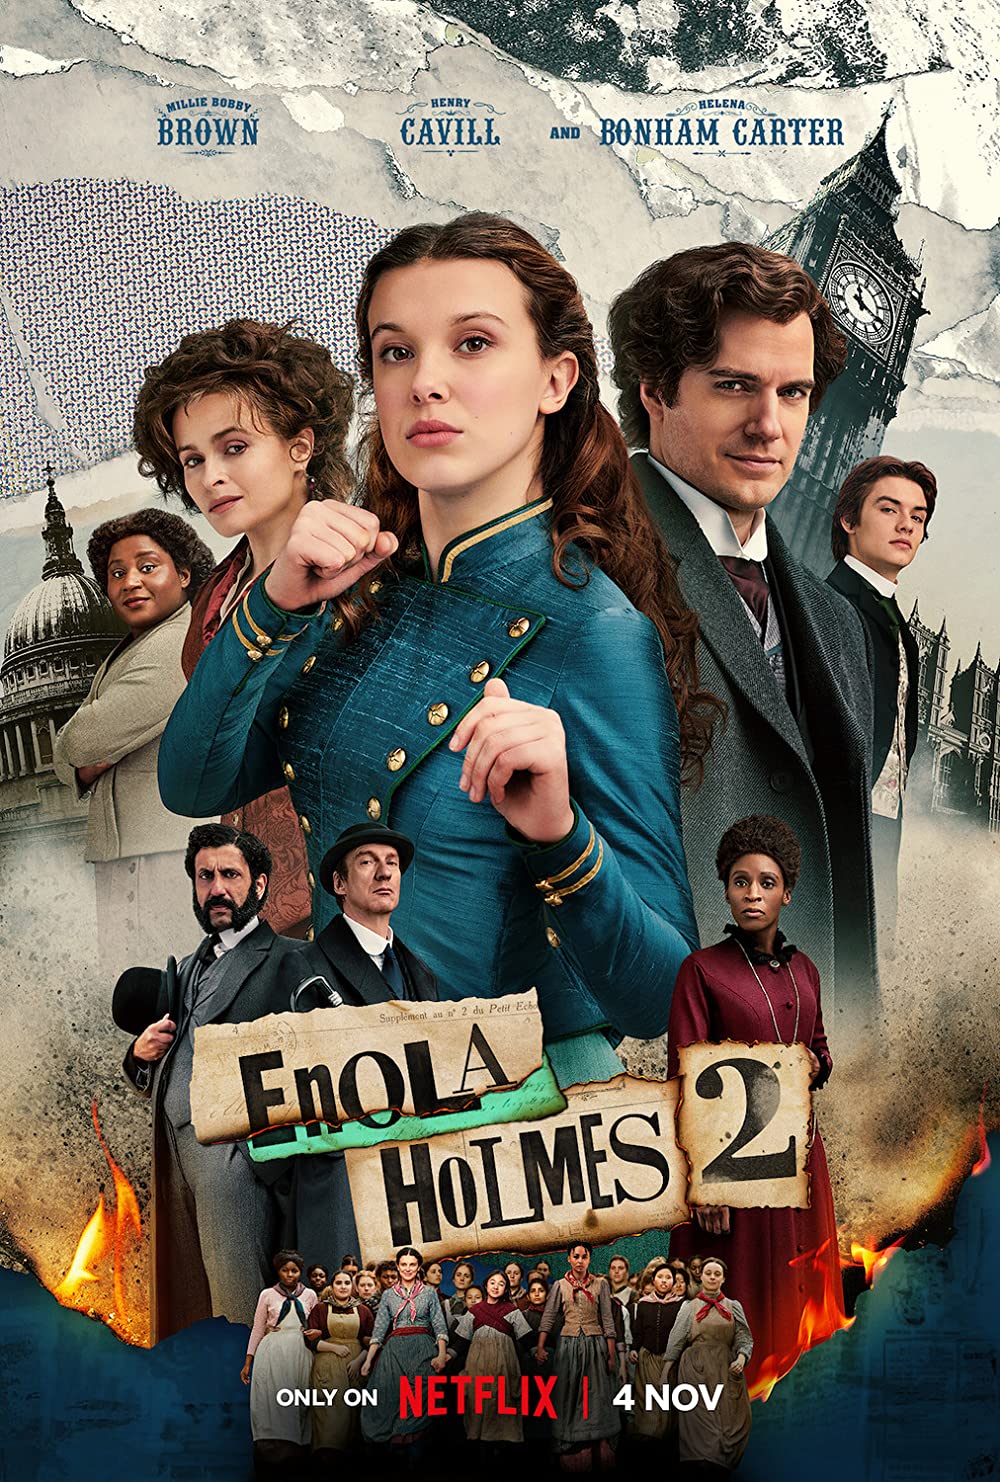 [Movie] Enola Holmes 2 (Netflix)